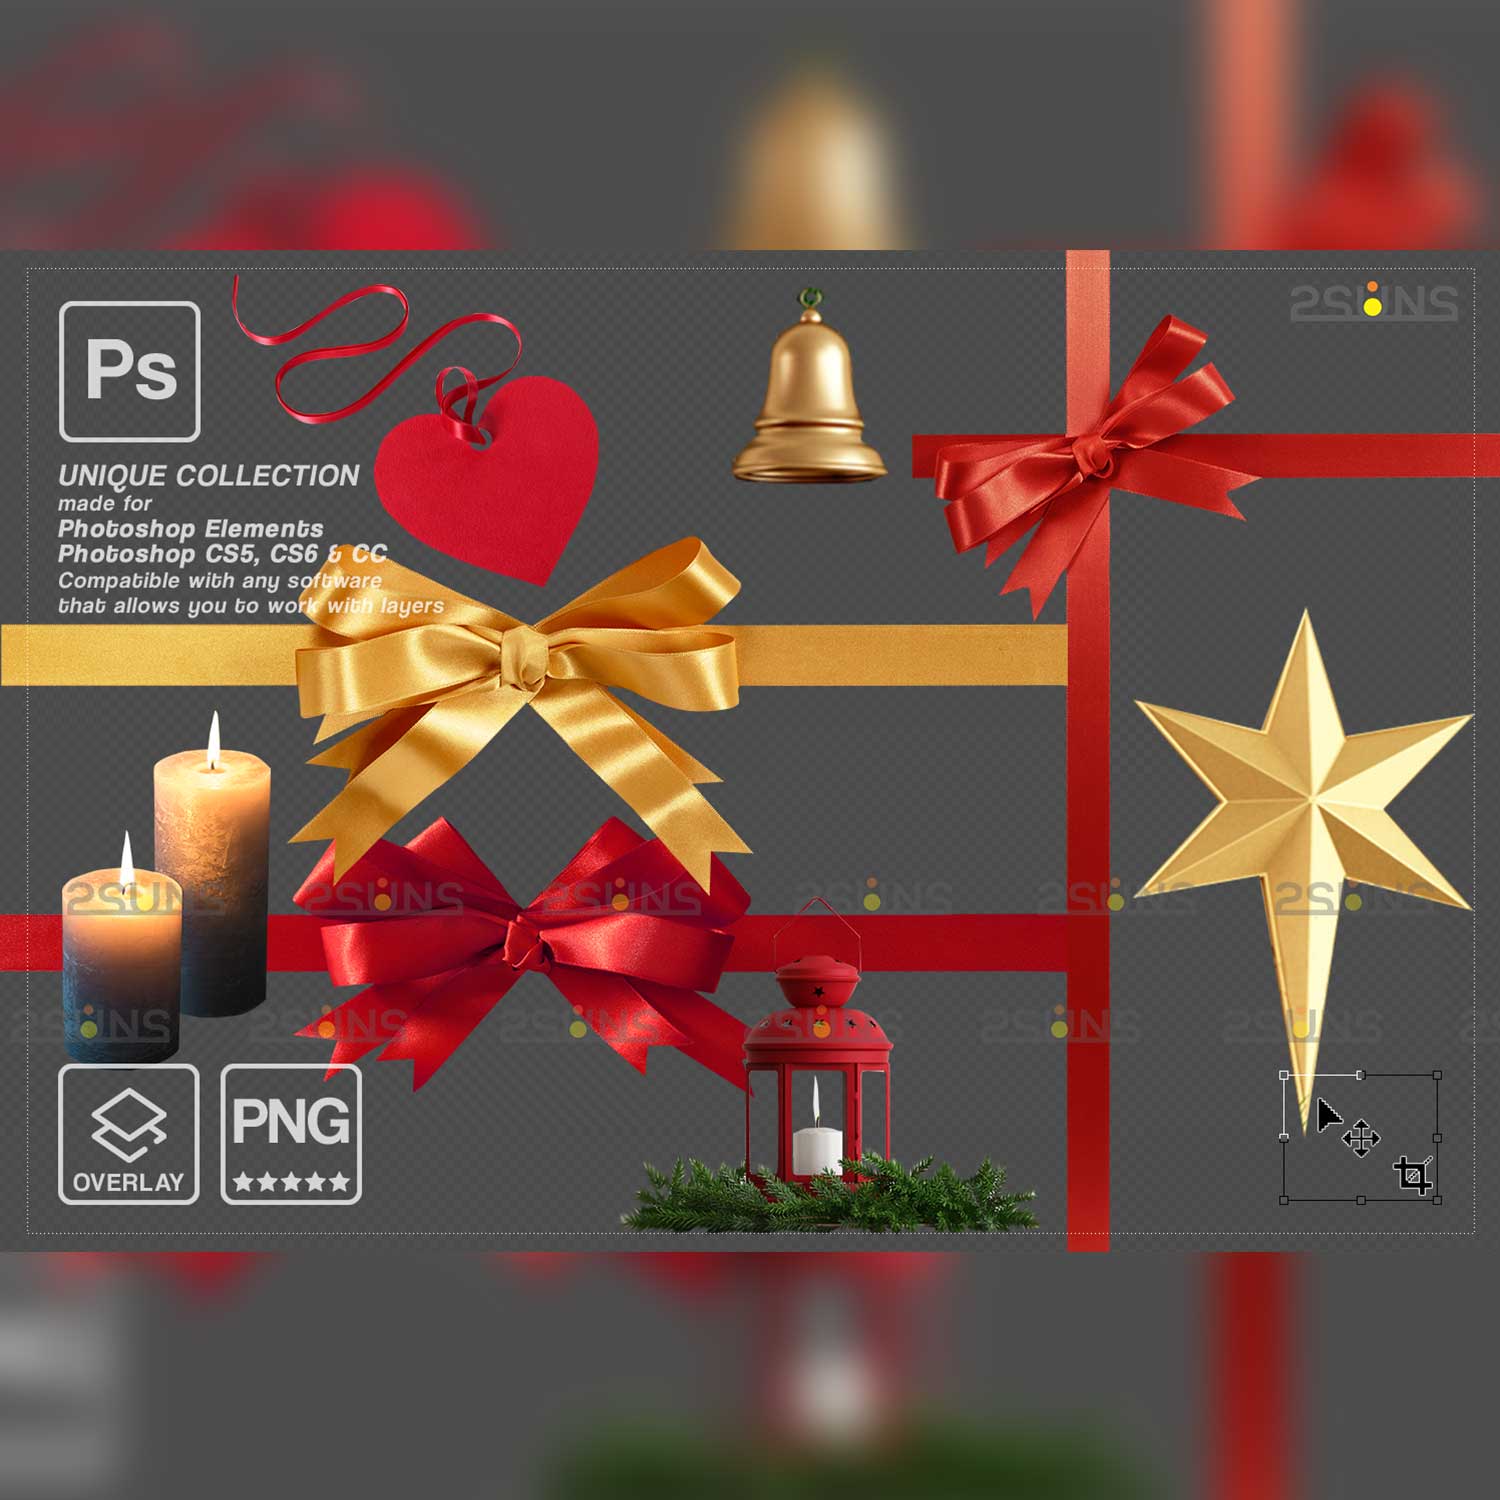 Christmas Light Photoshop Overlays cover image.